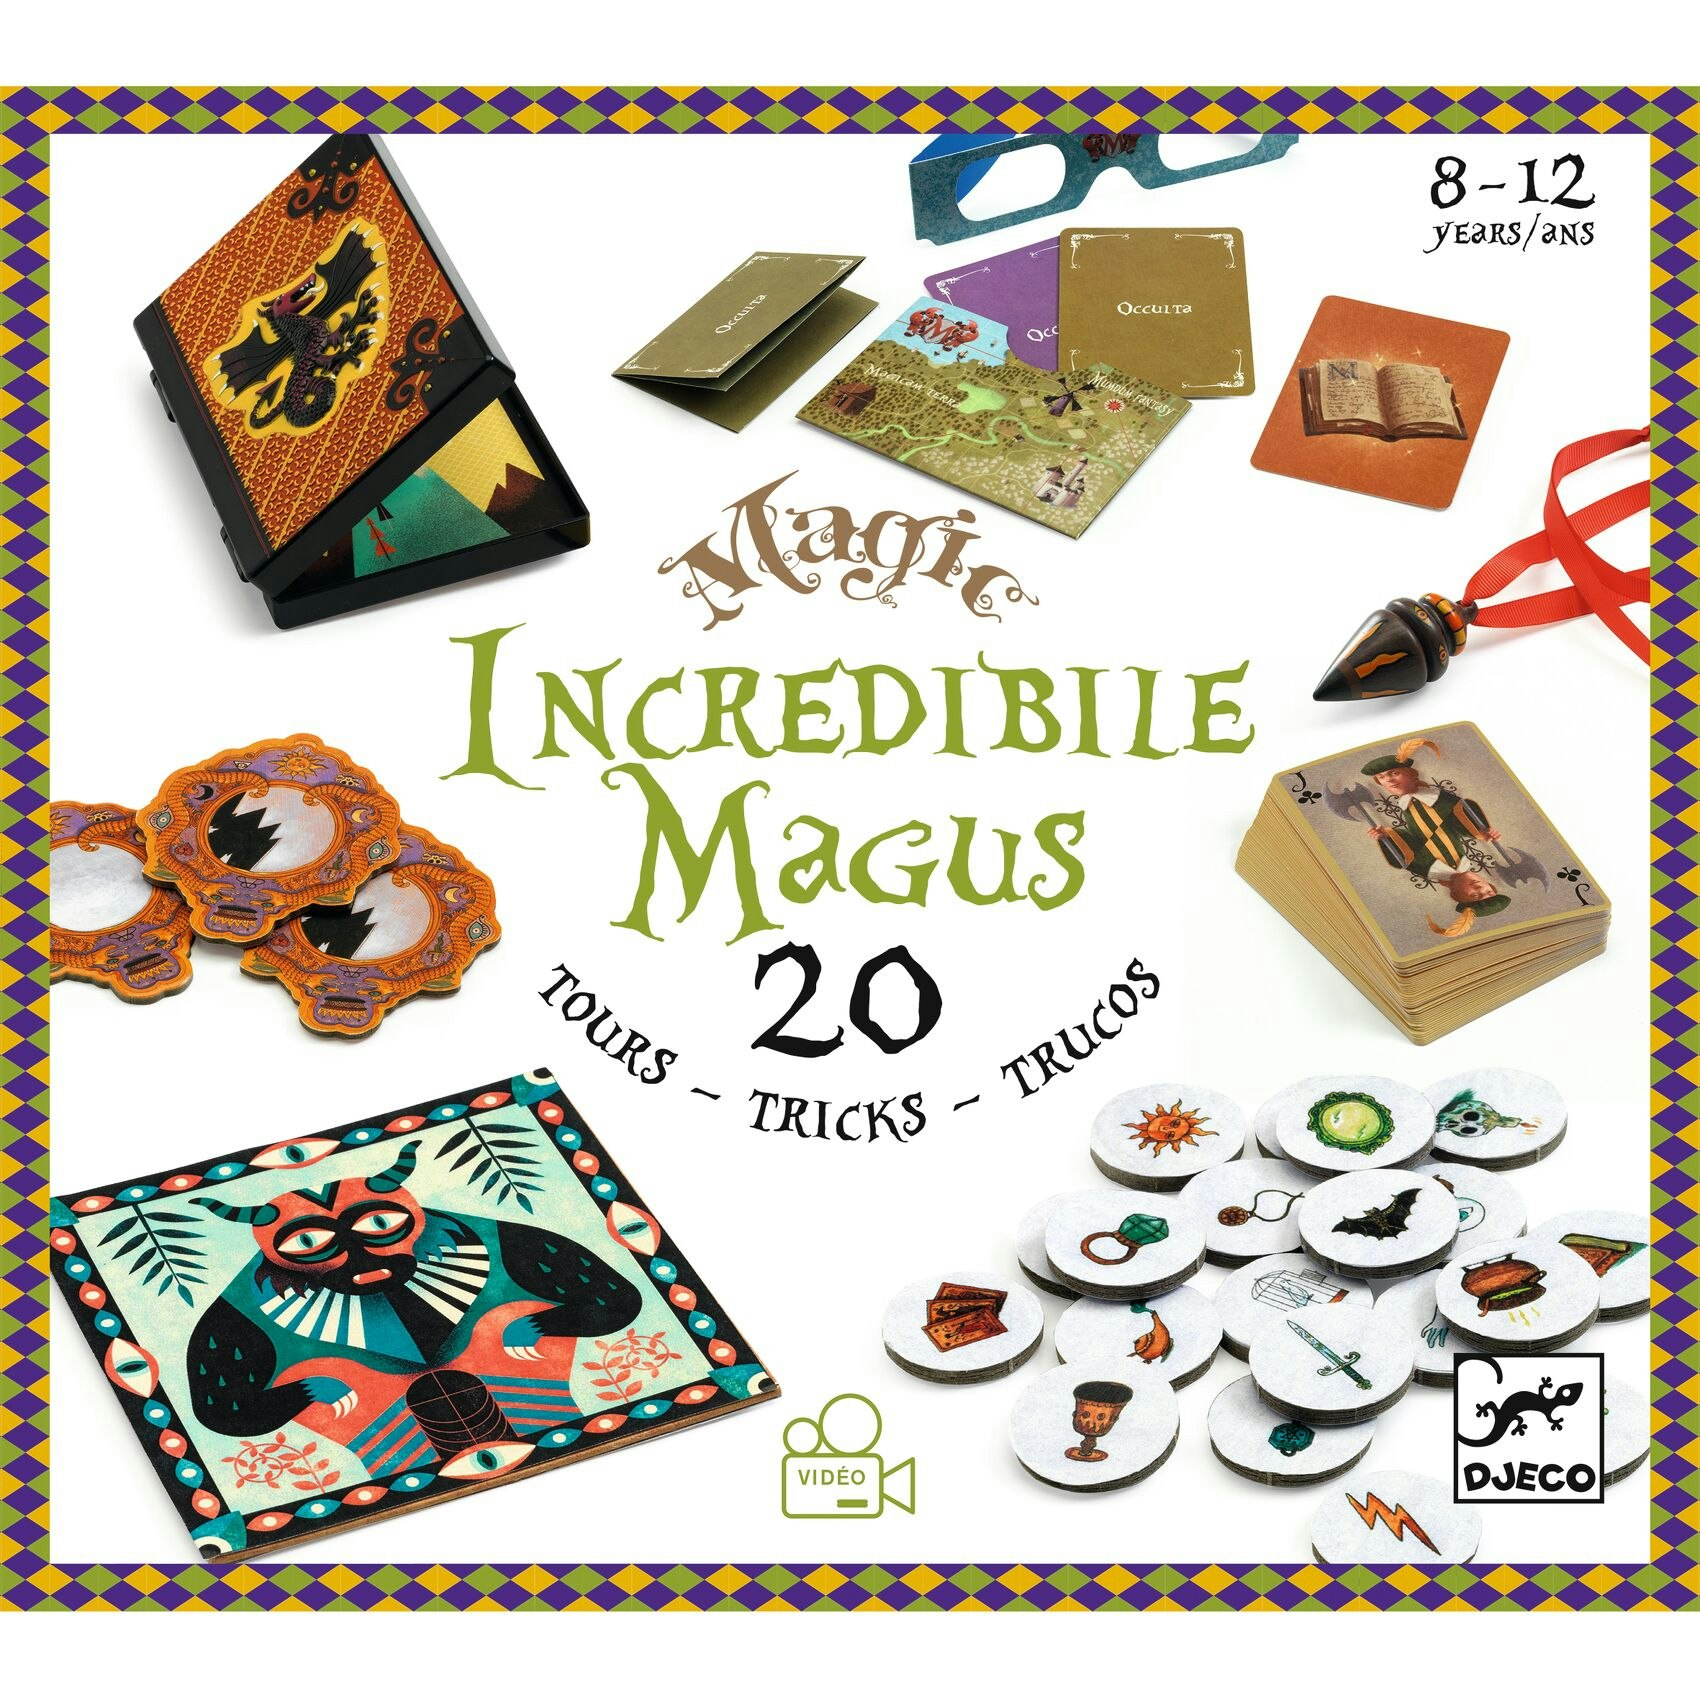 Djeco- Incredibile Magus- 20 olika magiska trick